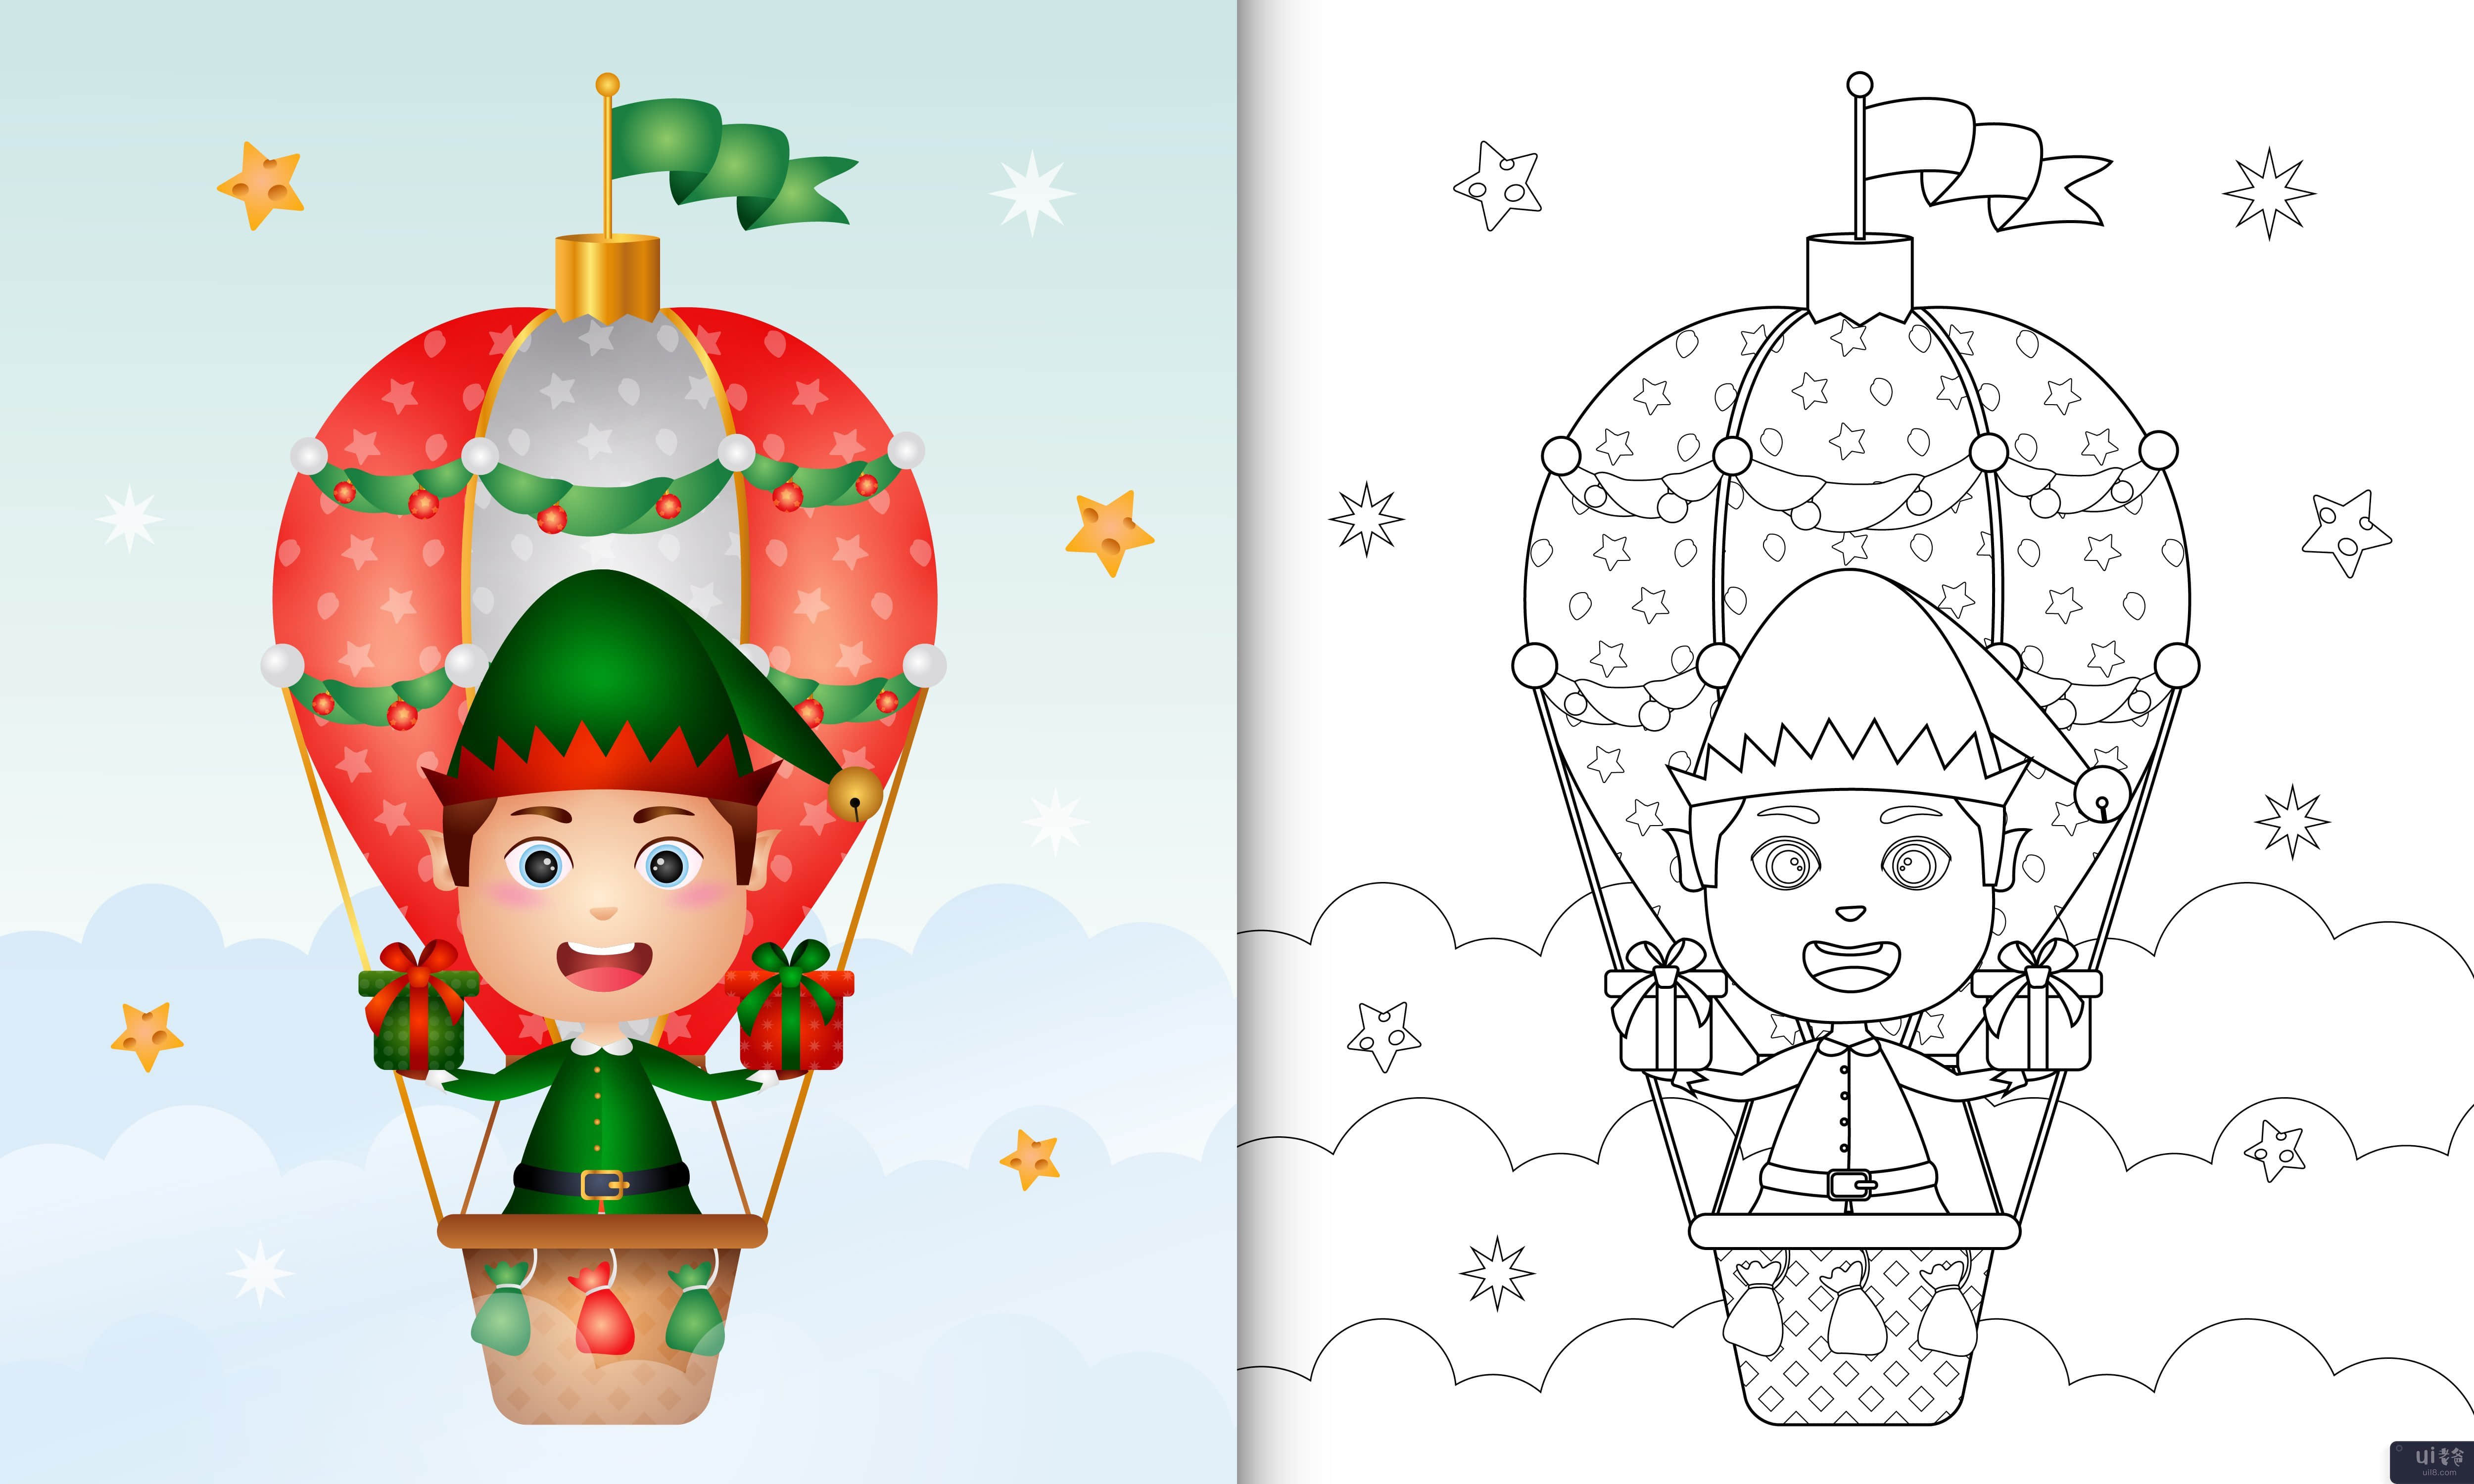 着色书与可爱的男孩精灵圣诞人物(coloring book with a cute boy elf christmas characters)插图2